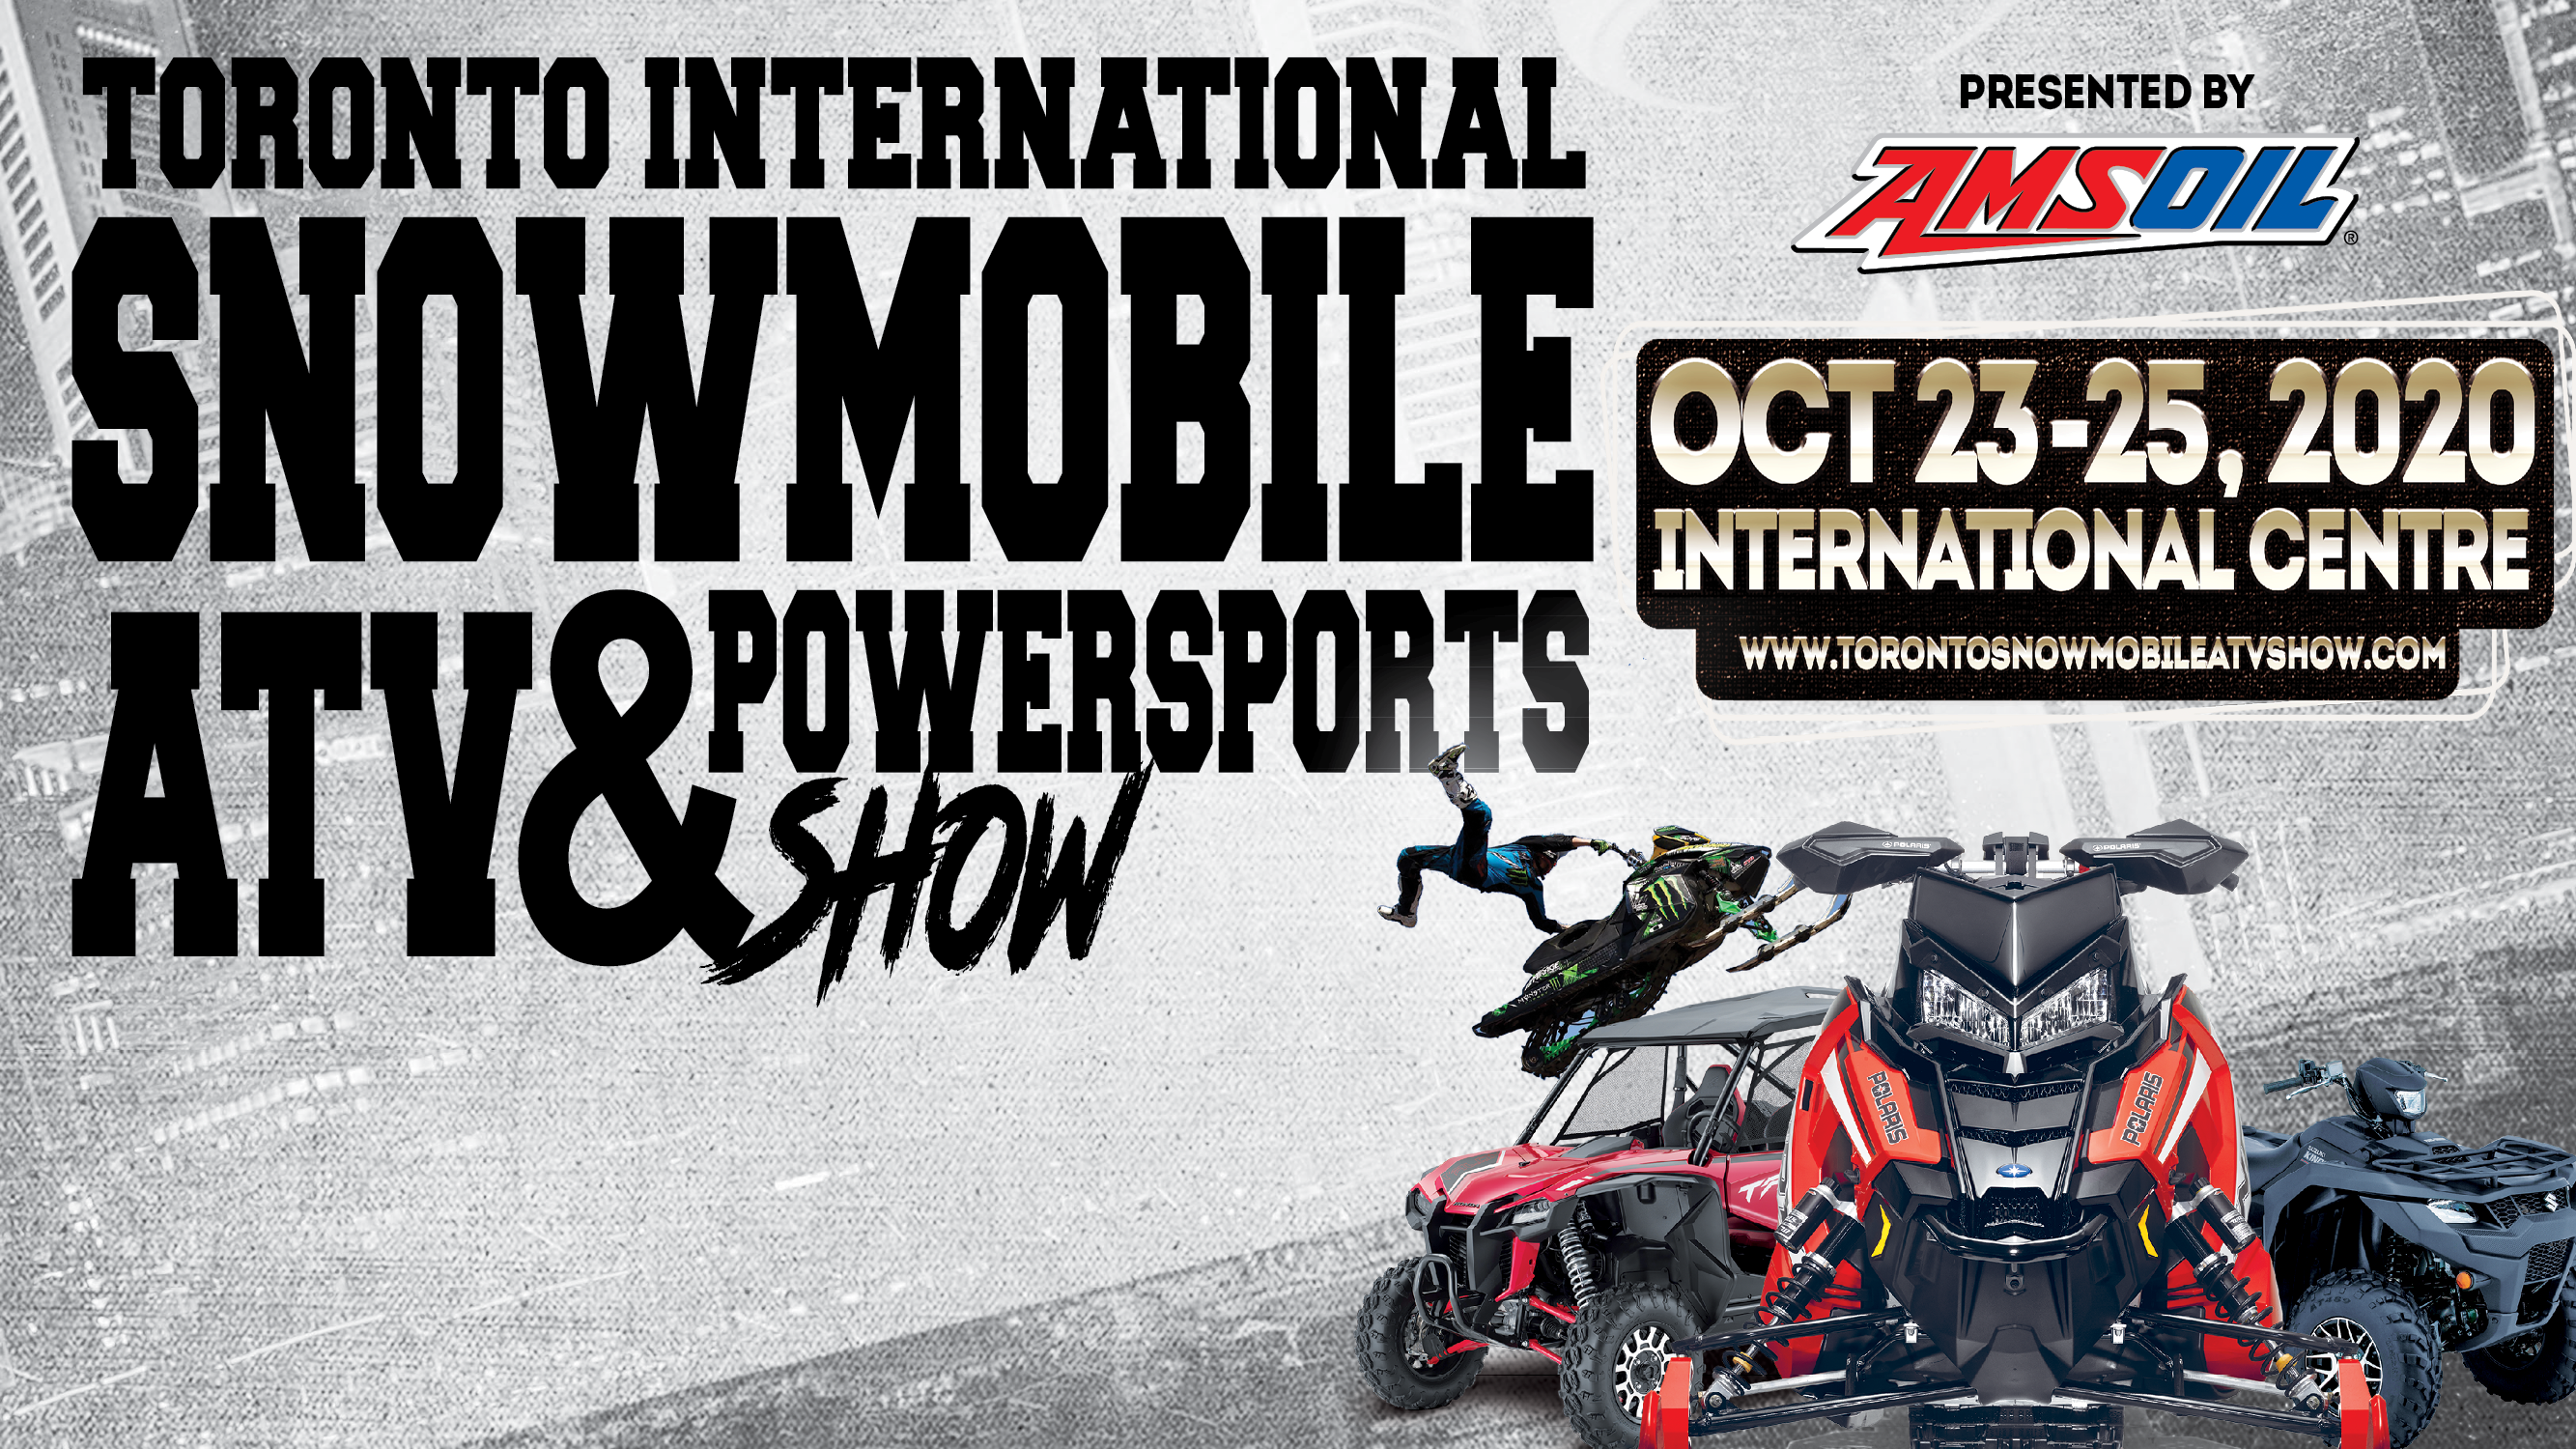 [CANCELLED] 33rd Annual Toronto International Snowmobile, ATV & Powersports Show